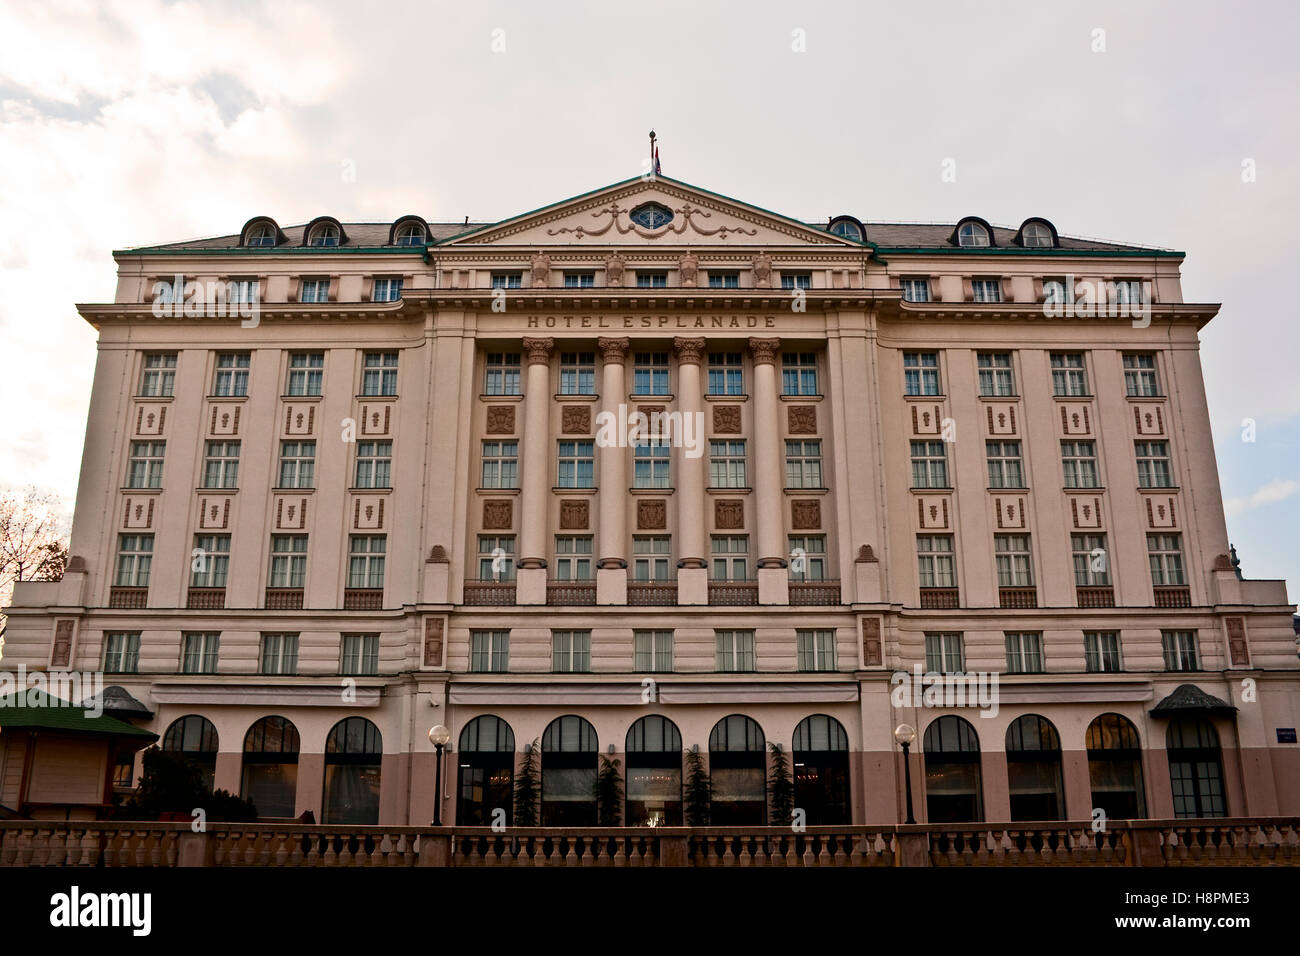 Hotel Esplanade, Zagreb, Croatie, Europe Banque D'Images